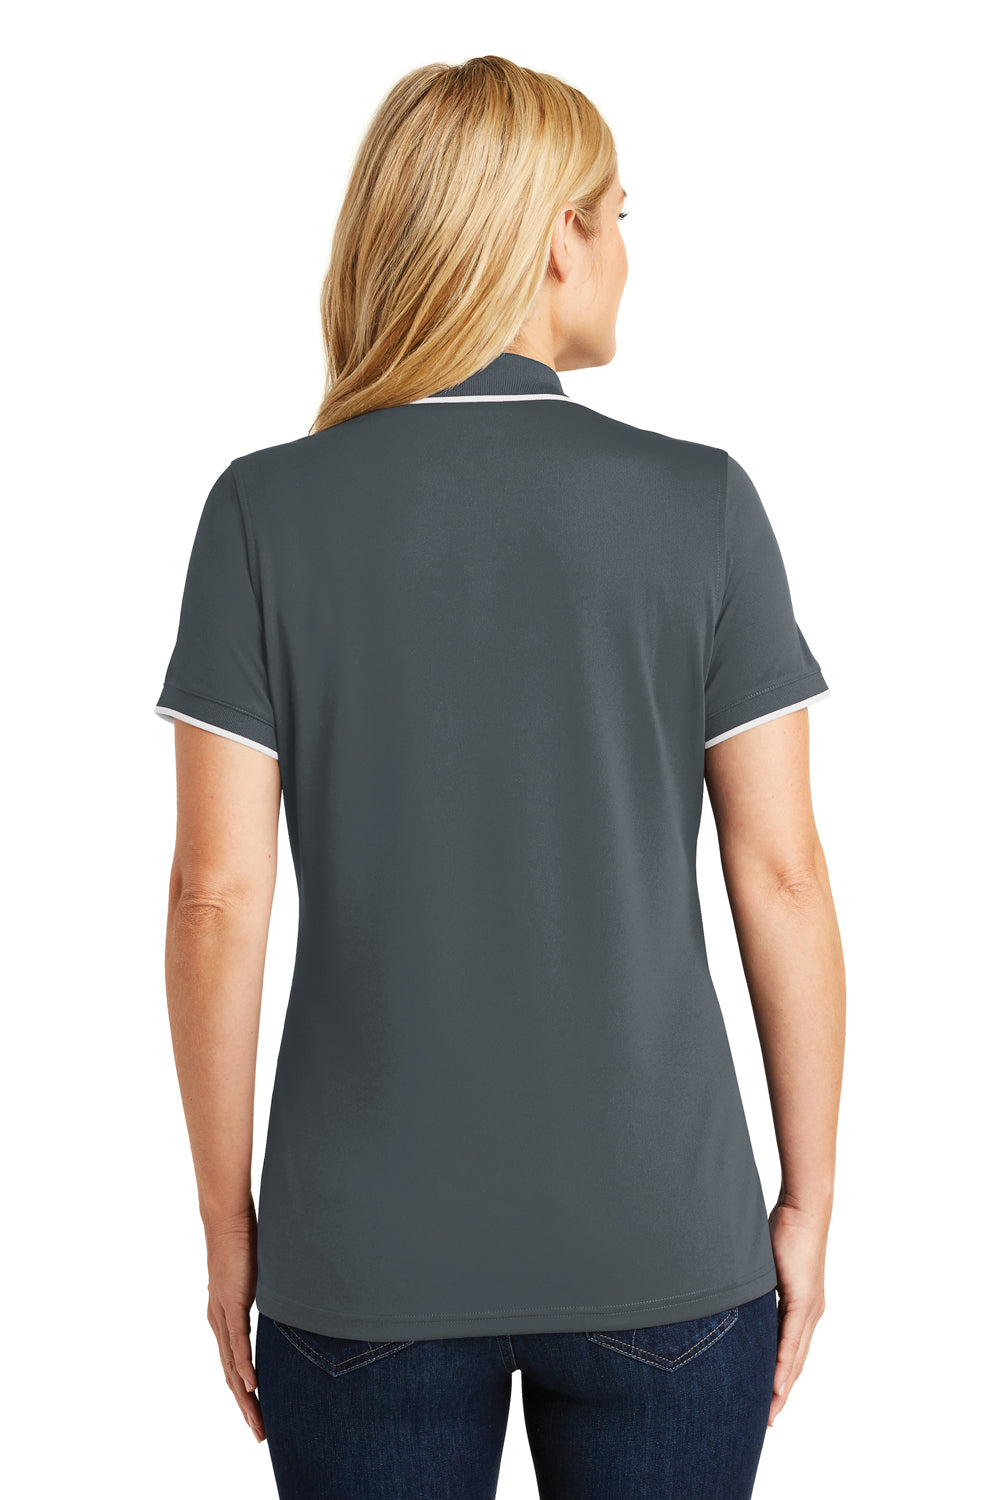 Port Authority LK111 Womens Dry Zone Moisture Wicking Short Sleeve Polo Shirt Graphite Grey/White Back